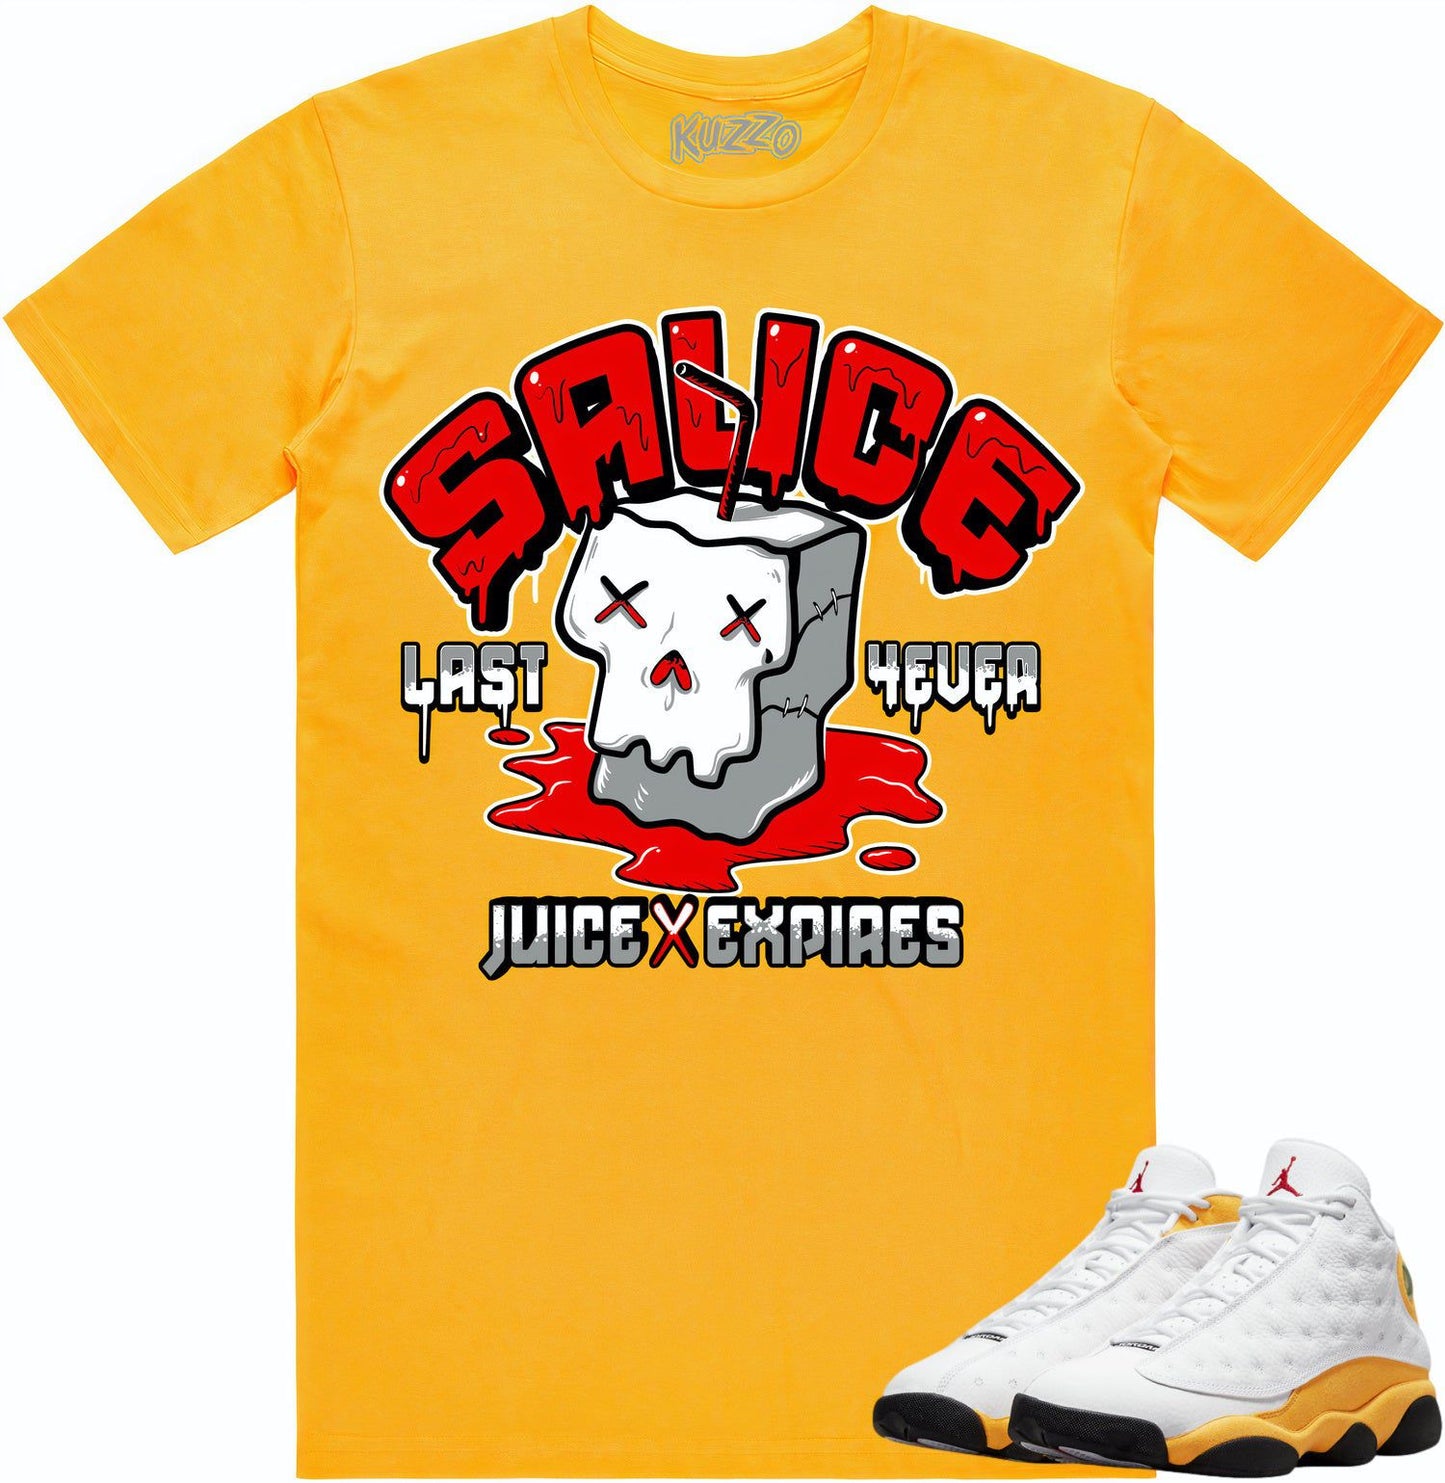 University Gold 13s Shirt - Jordan Retro 13 Sneaker Tees - Sauce